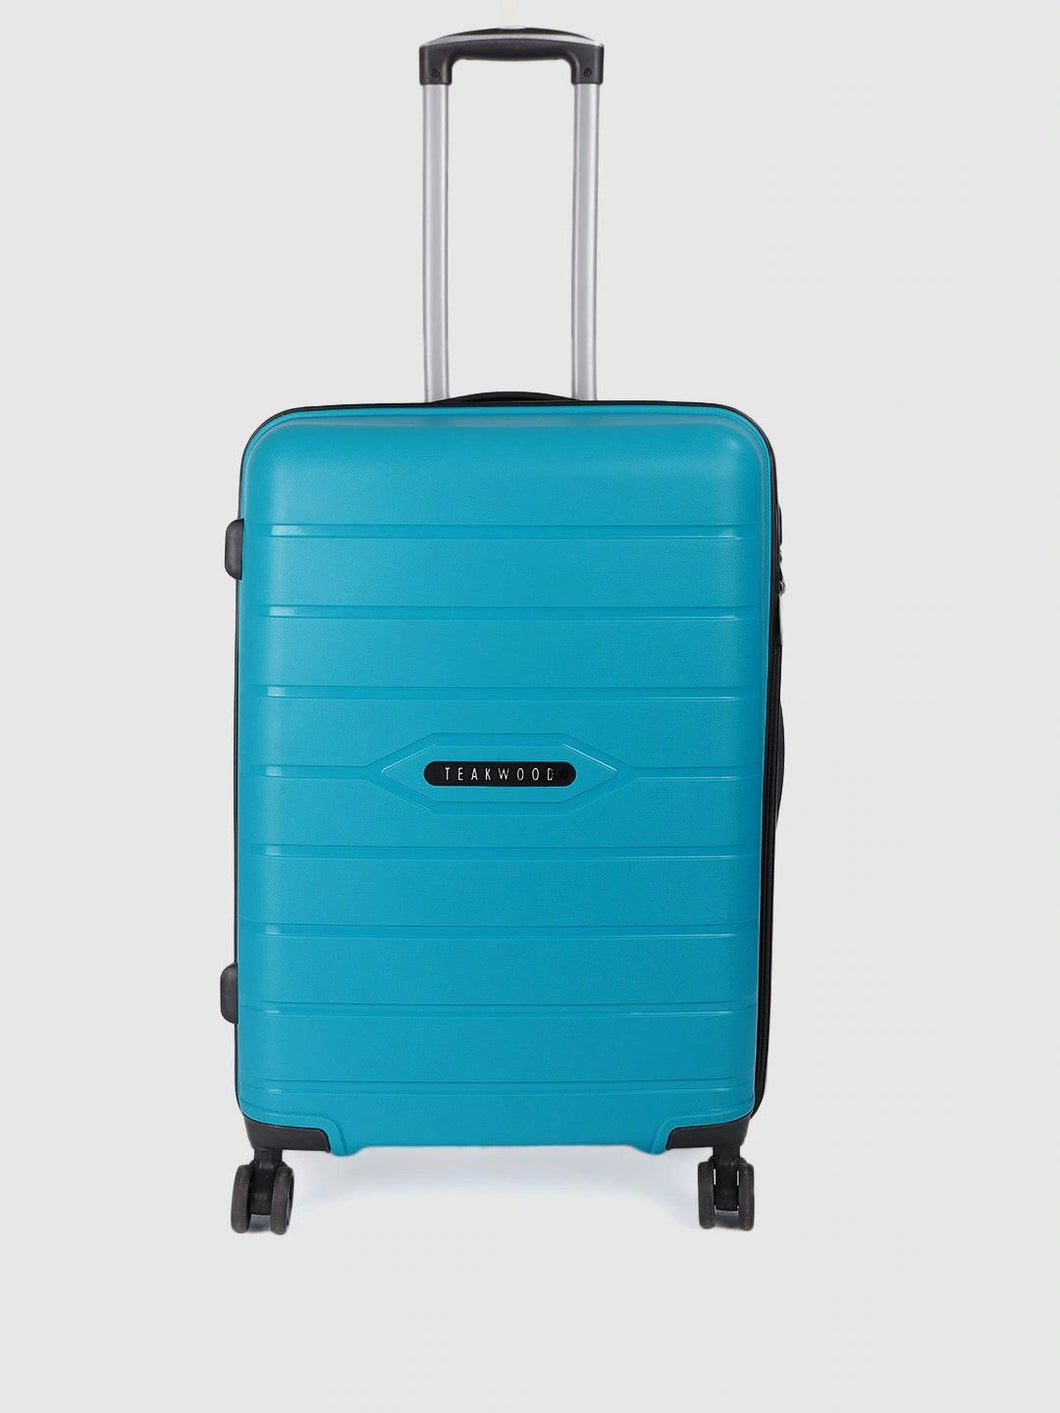 Aqua Blue Textured Hard-Sided Cabin Trolley Suitcase